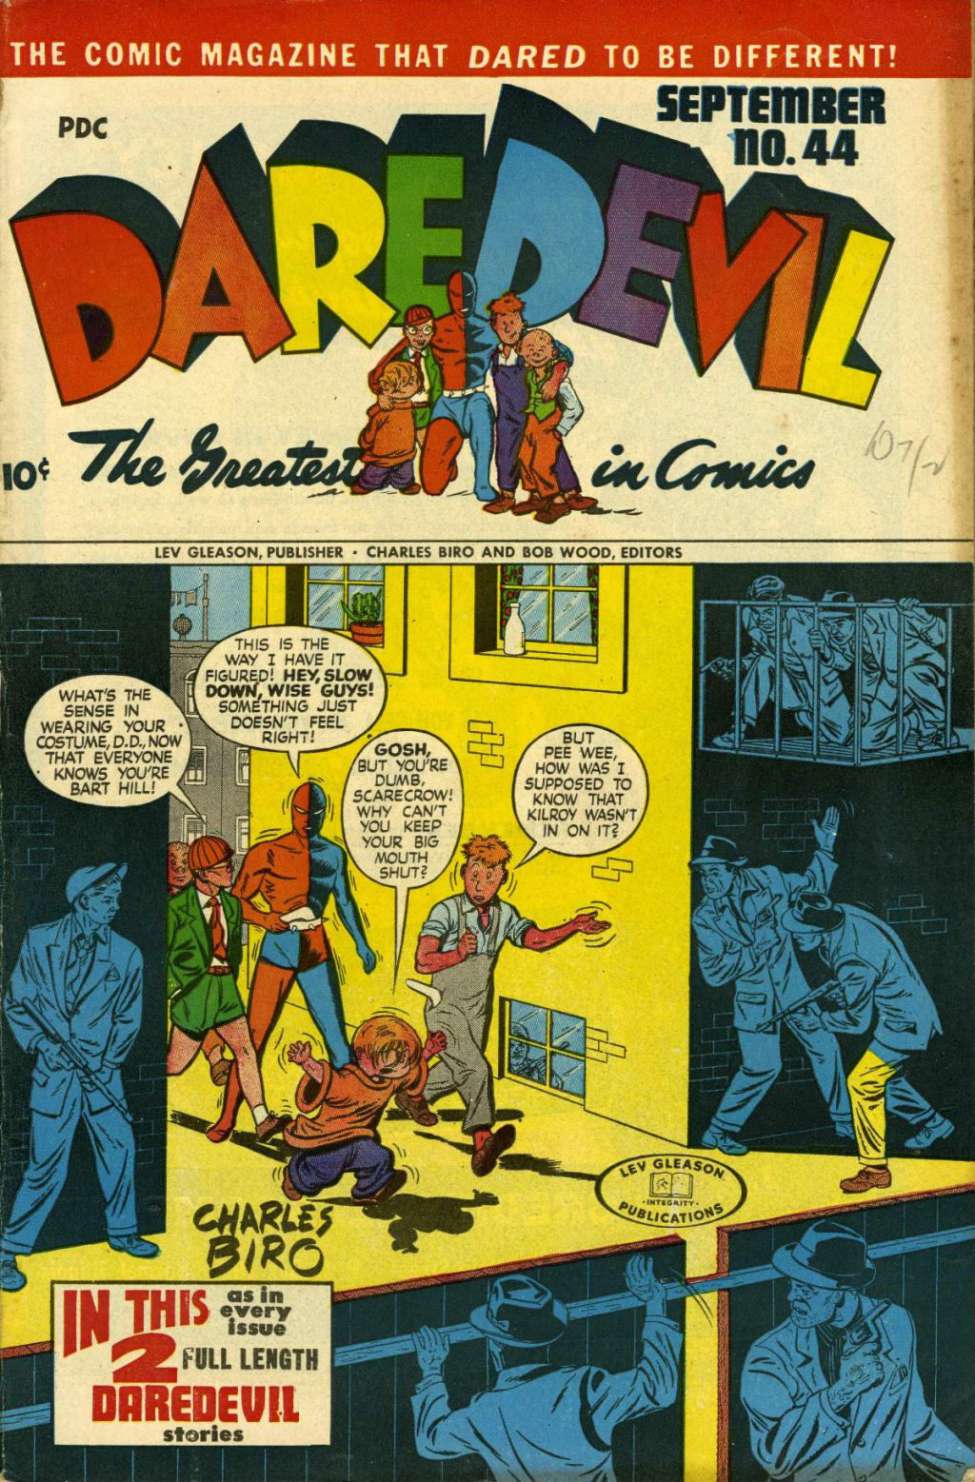 Comic Book Cover For Daredevil - The Complete Archive Part 4